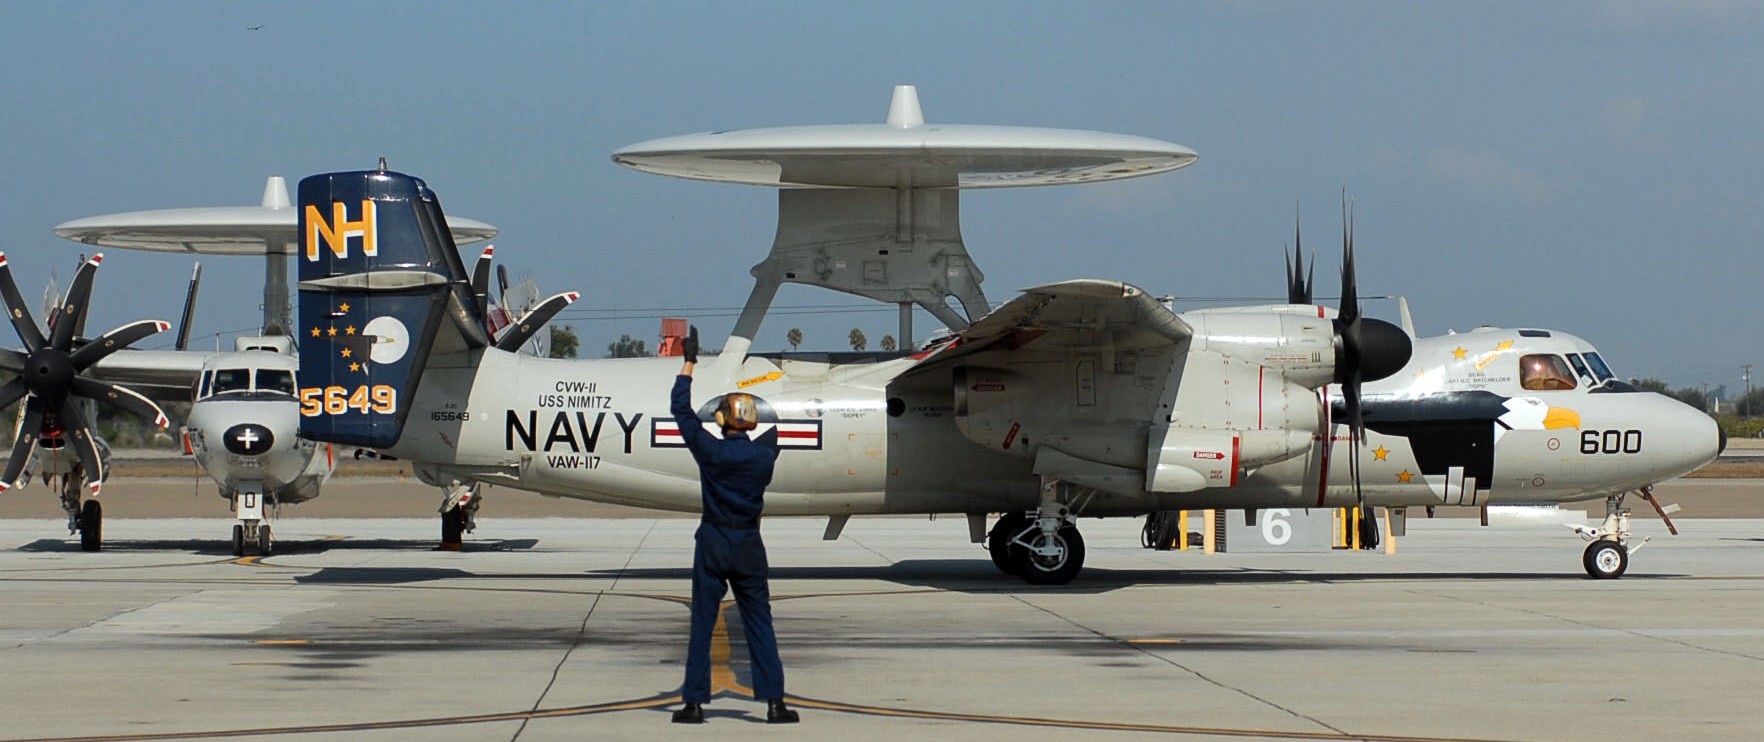 vaw-117 wallbangers carrier airborne early warning squadron navy e-2c hawkeye naval base ventura county point mugu california 109